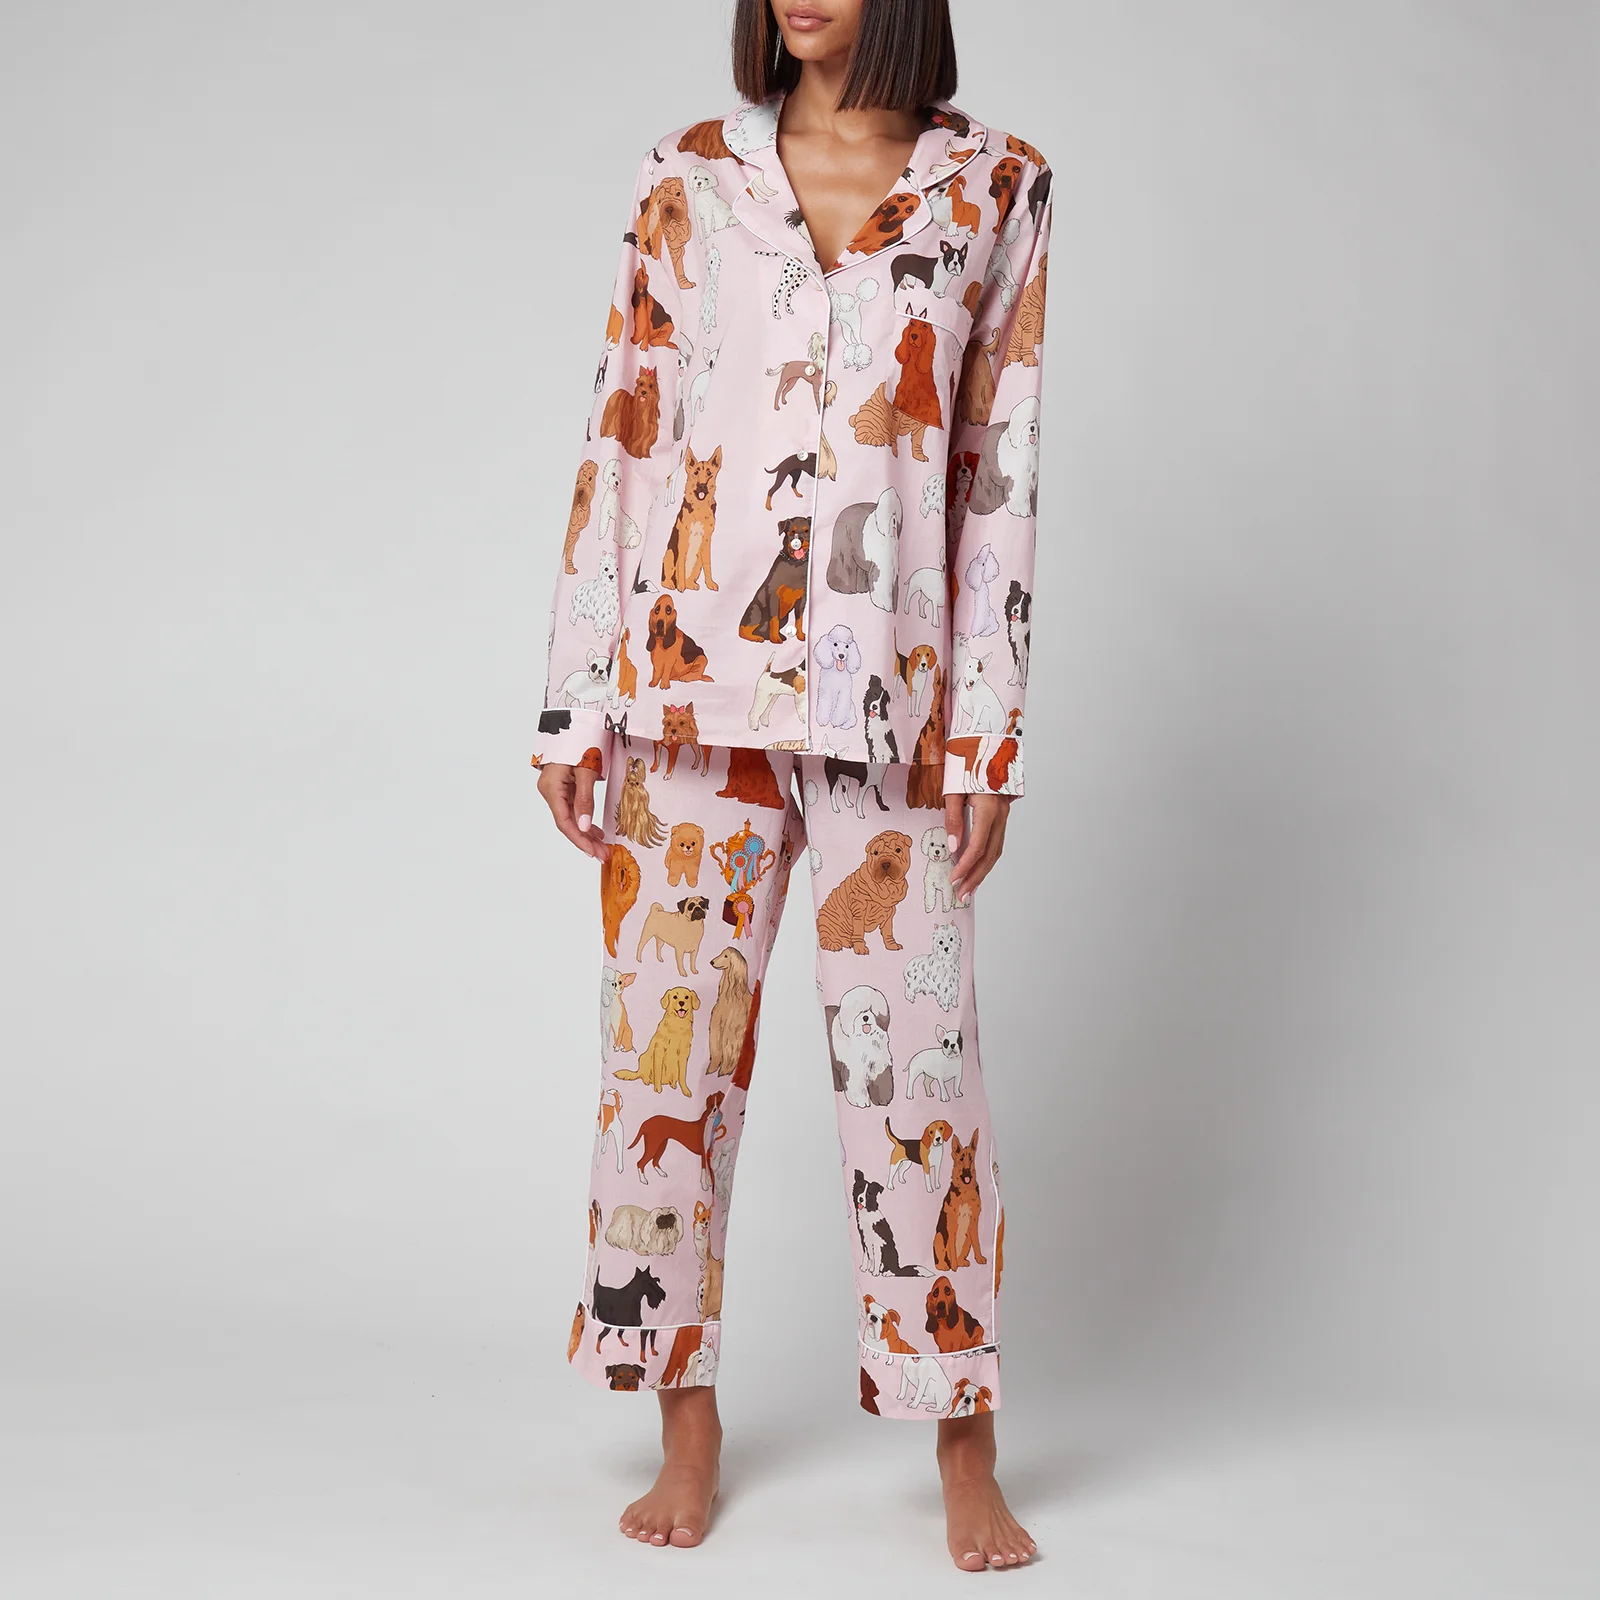 Karen Mabon Women's Crufts Pyjama Set - Pink Image 1